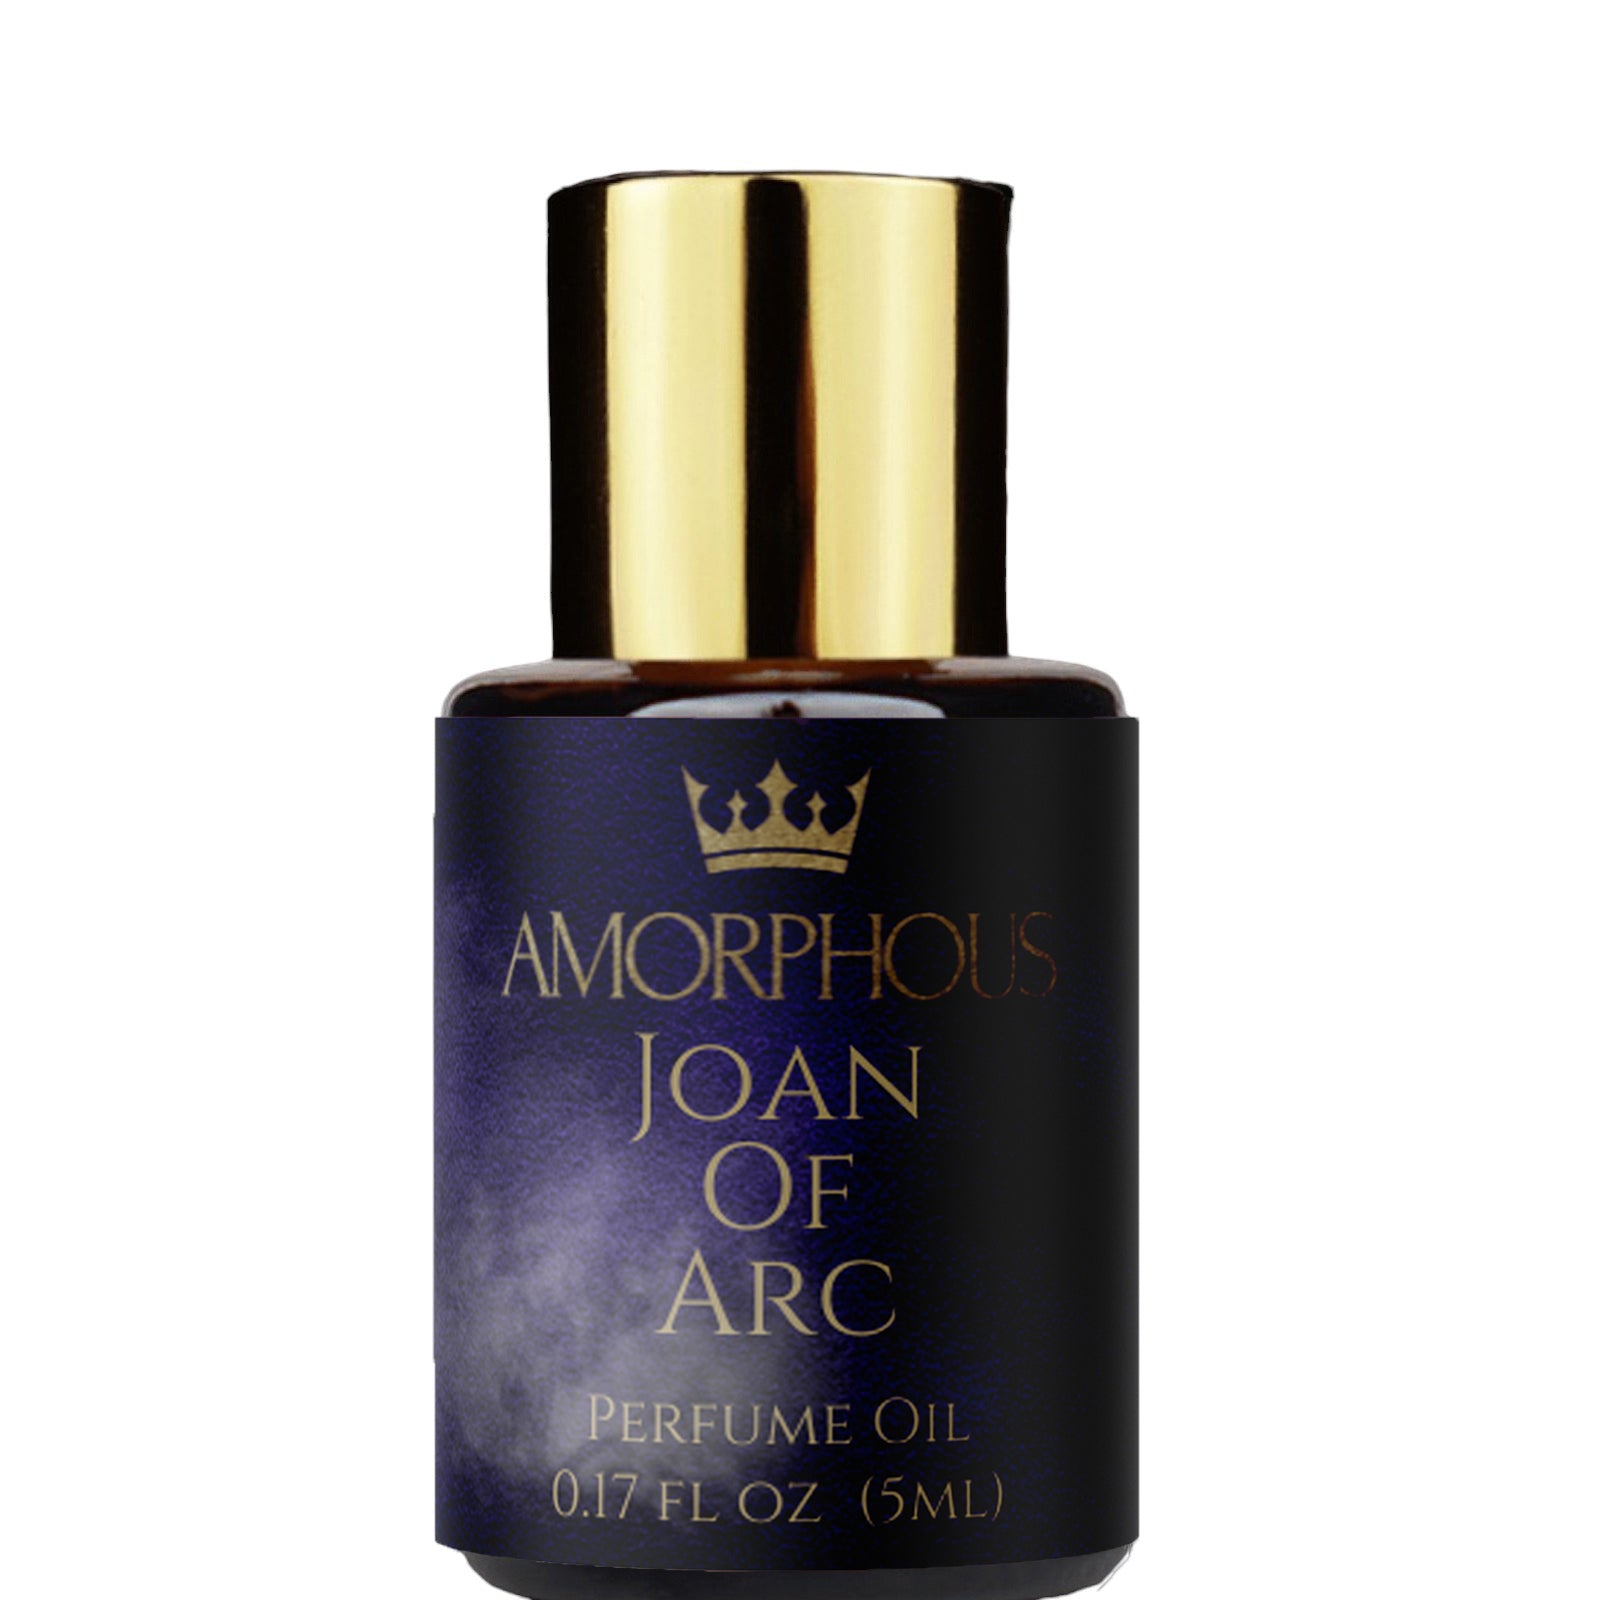 Joan Of Arc perfume oil